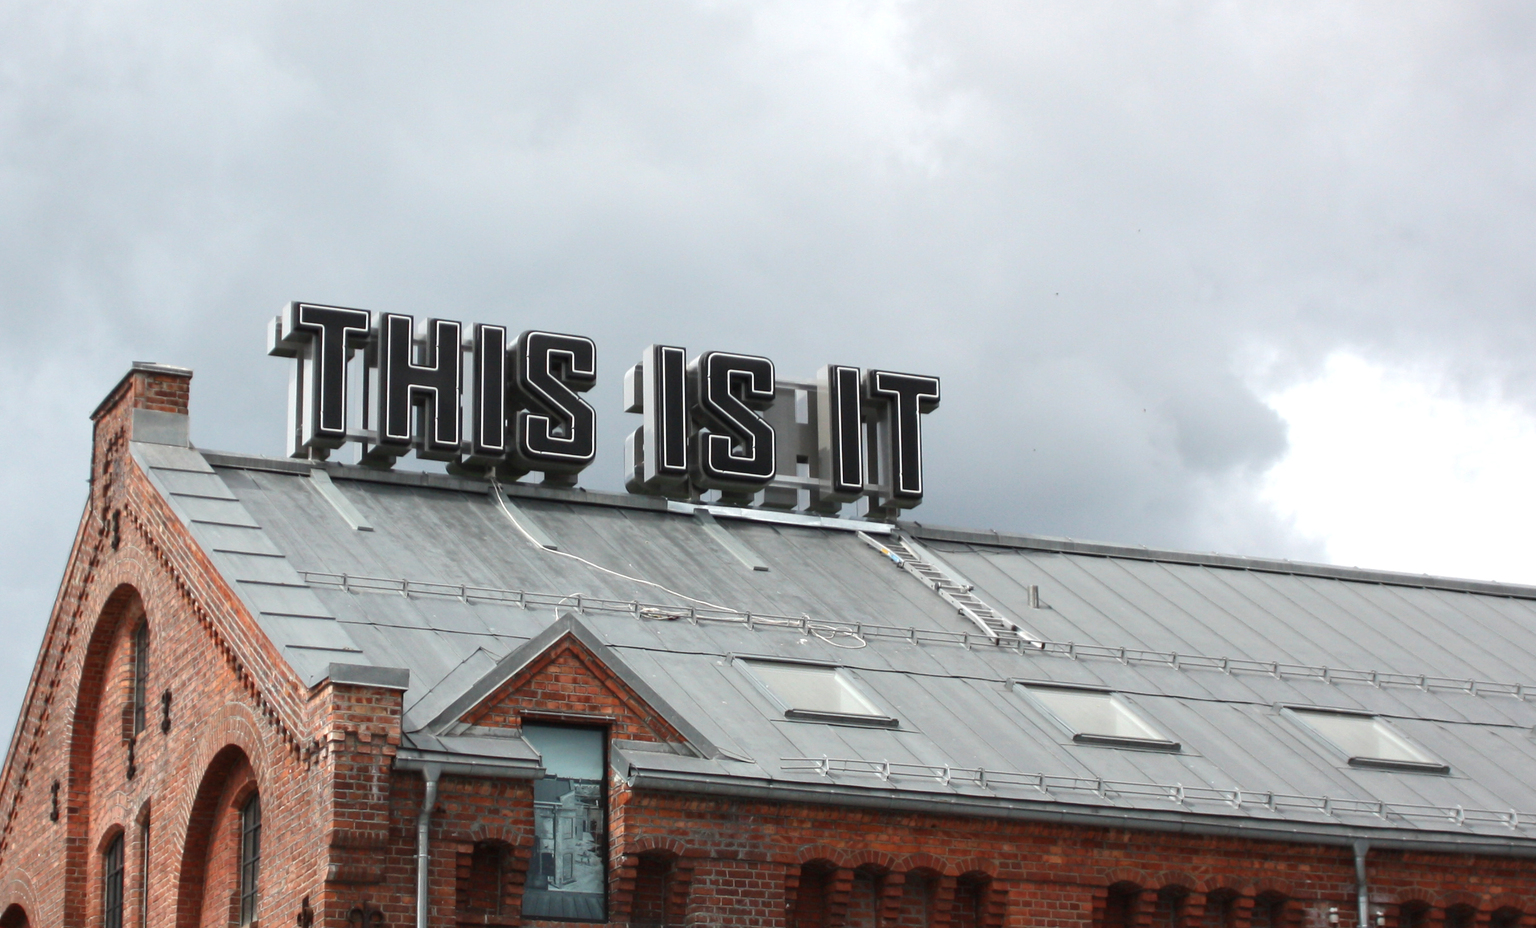 "This Is It" (2012) av Gardar Eide Einarsson. Foto: Kjetil Helland/Kunsthøgskolen i Oslo